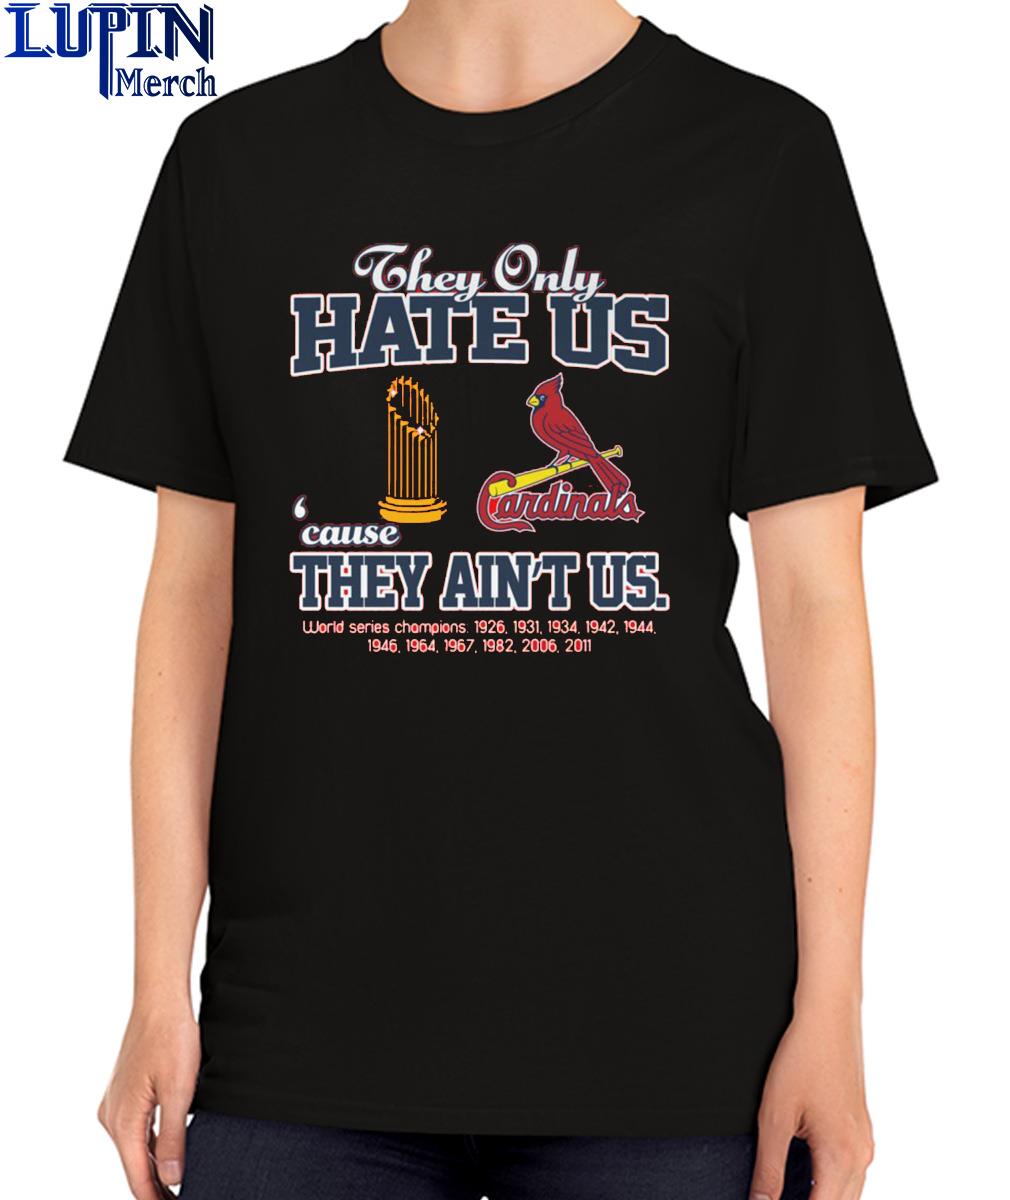 St. Louis Cardinals 2011 World Series Championship Shirt for Sale